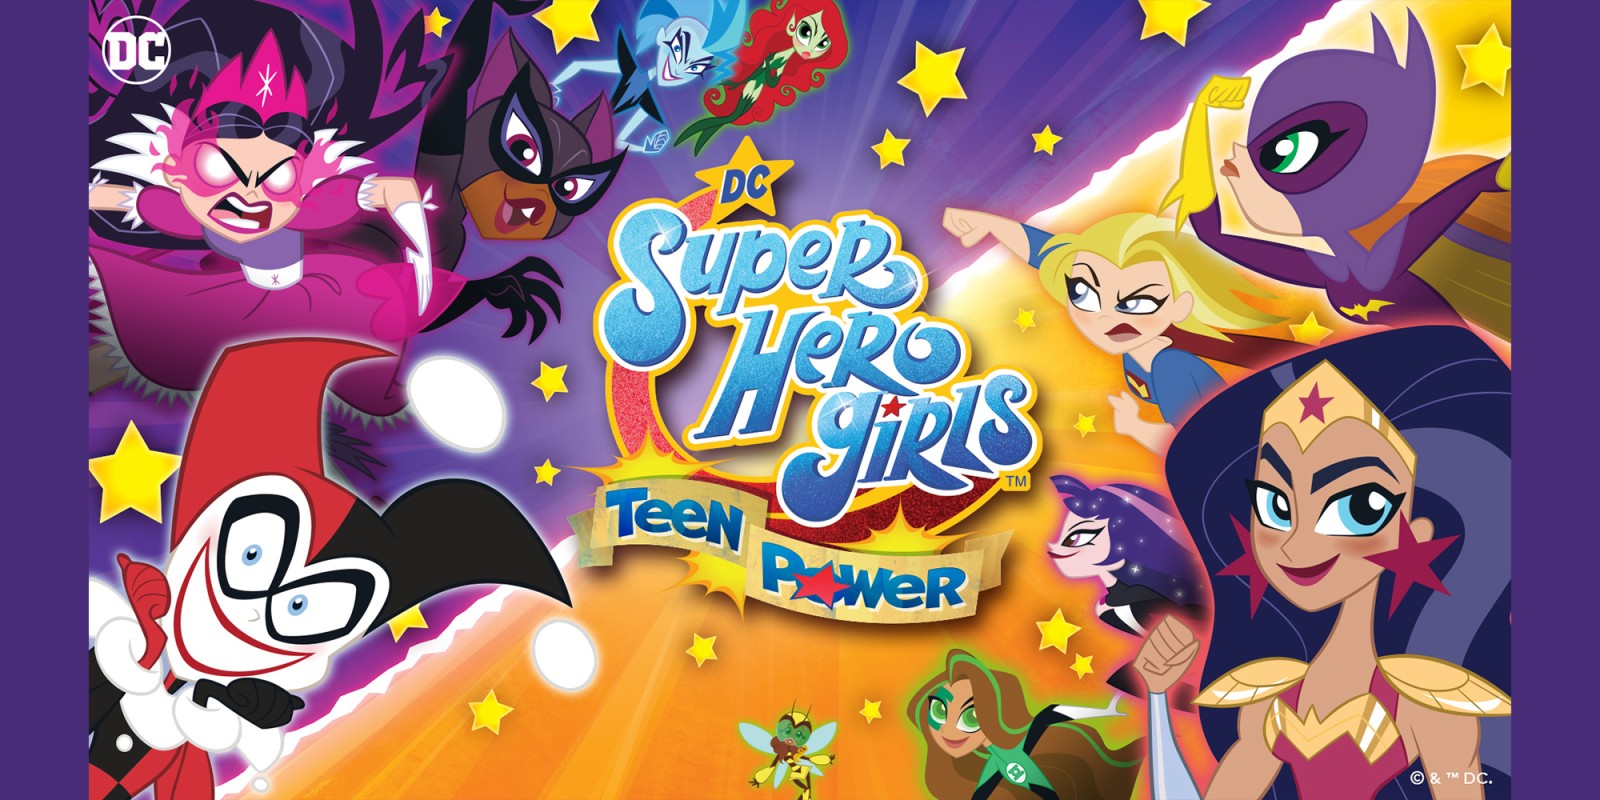 DC Super Hero Girls Teen Power disponibile per Nintendo Switch